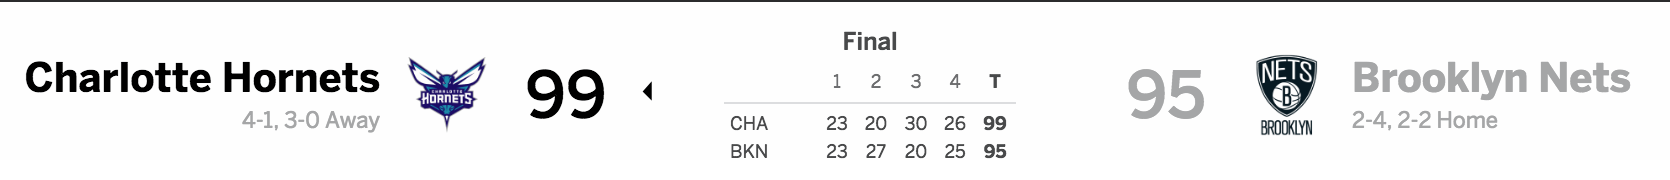 Brooklyn Nets vs. Charlotte Hornets 11/04/16 Score